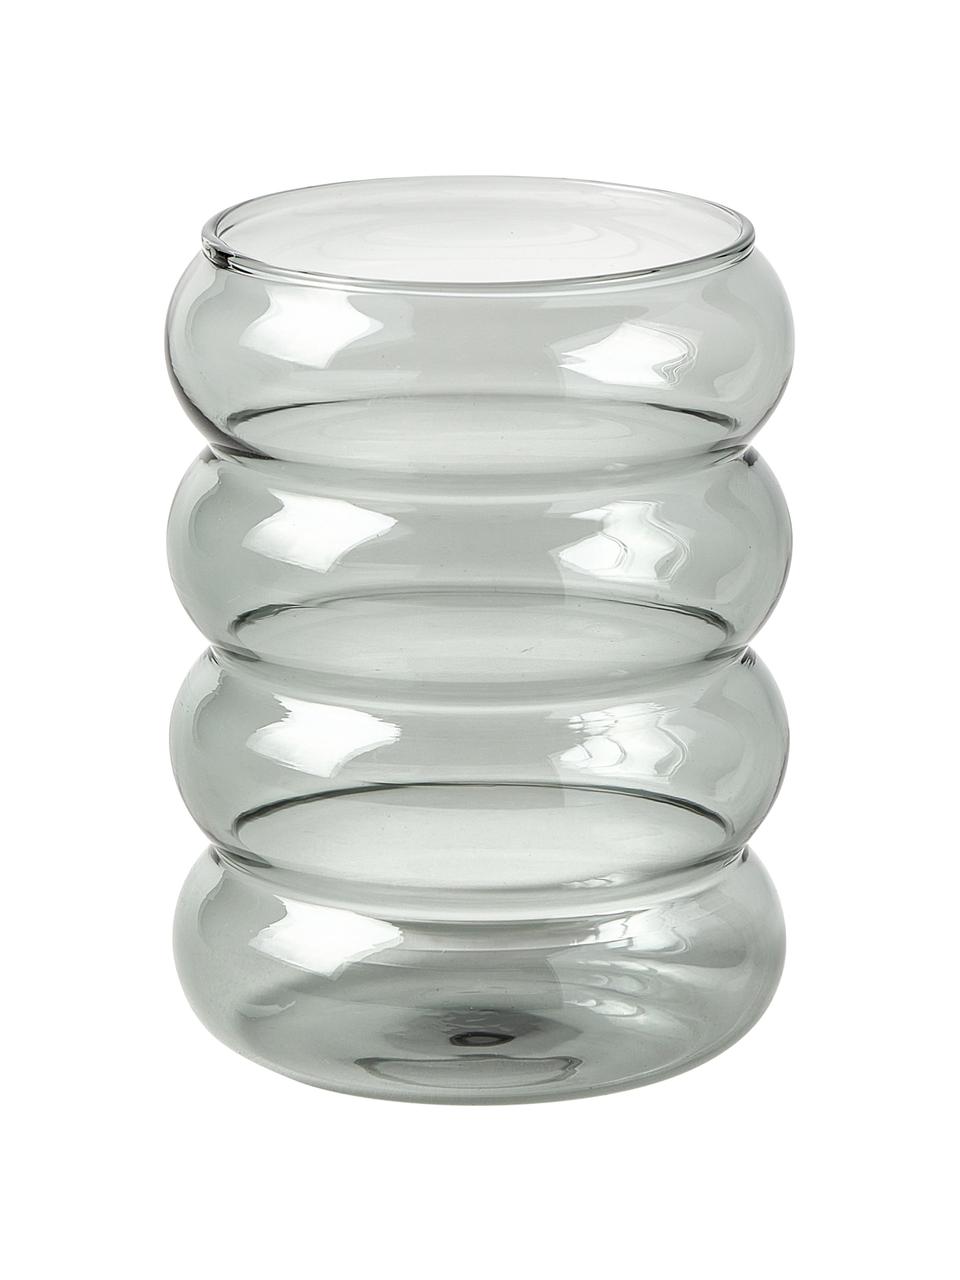 Mondgeblazen waterglazen Lalo in grijs, 4 stuks, Borosilicaatglas, Grijs, transparant, Ø 8 x H 10 cm